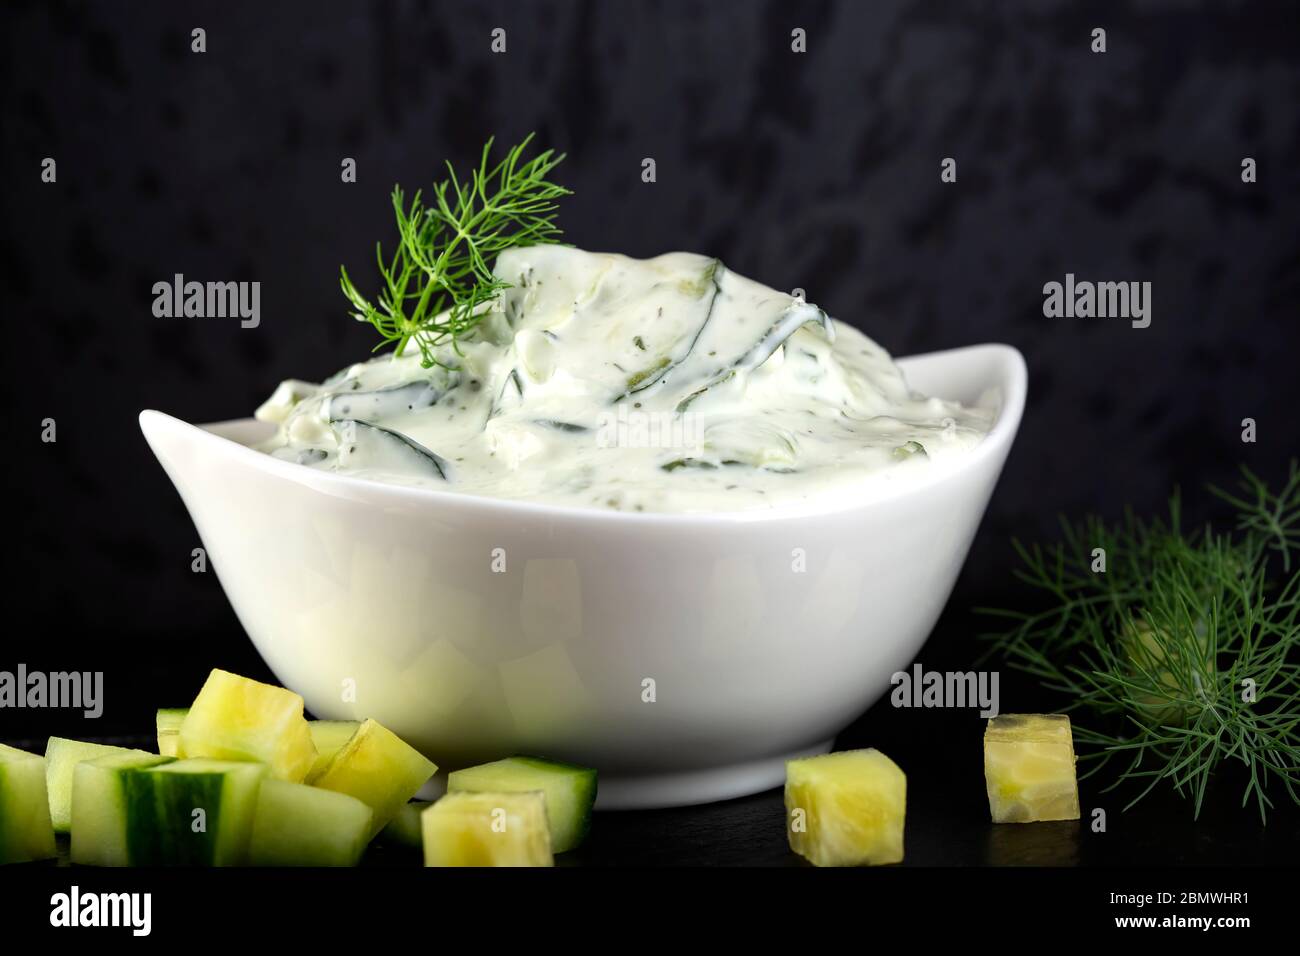 Cucumber yogurt salad with herbs Stock Photo